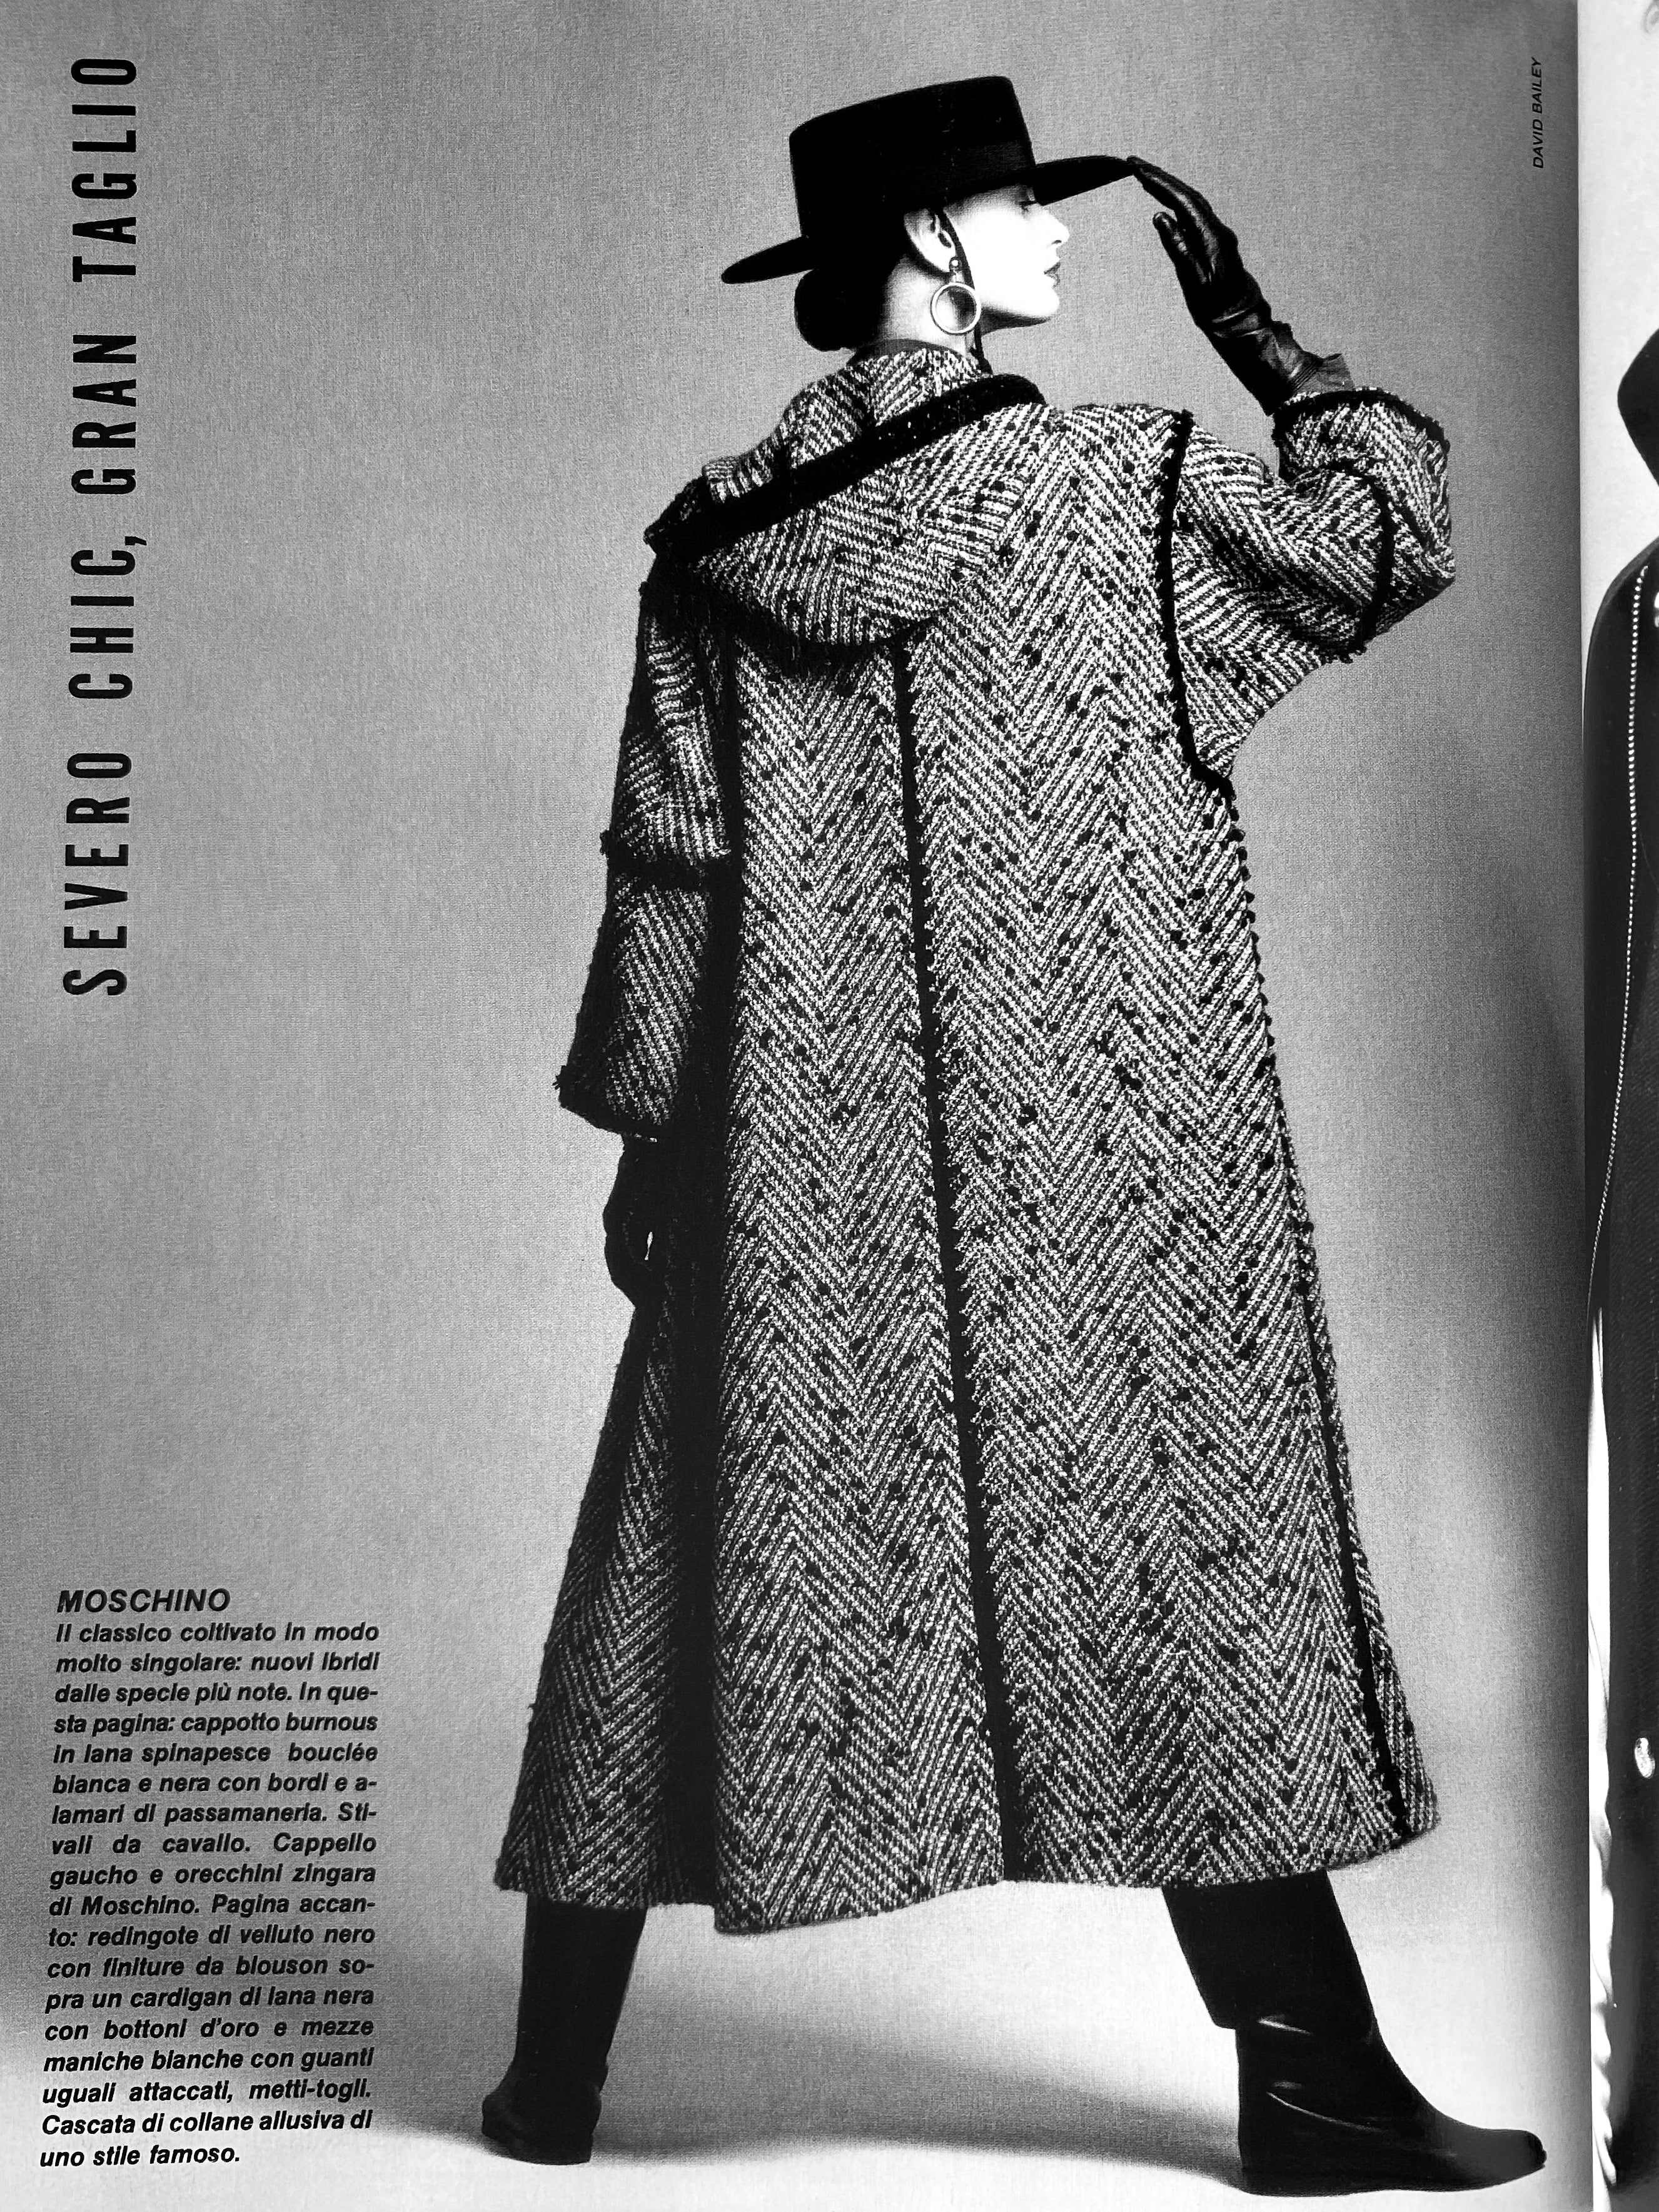 Vogue Italia N°437, July/August 1986